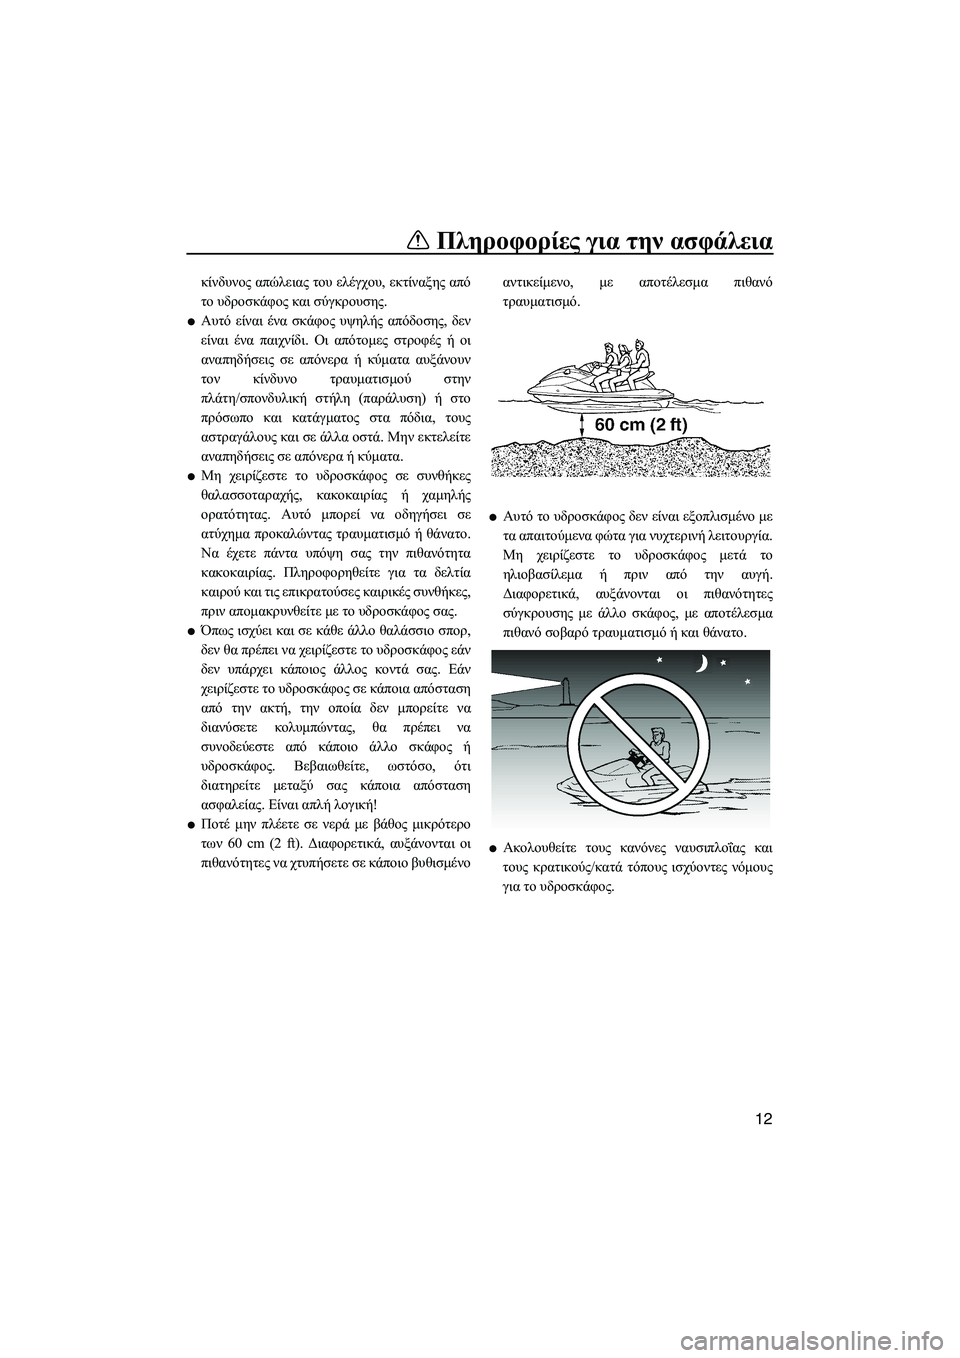 YAMAHA FX HO 2007  ΟΔΗΓΌΣ ΧΡΉΣΗΣ (in Greek) Πληροφορίες για την ασφάλεια
12
κίνδυνος απώλειας του ελέγχου, εκτίναξης από
το υδροσκάφος και σύγκρουσης.
Αυ